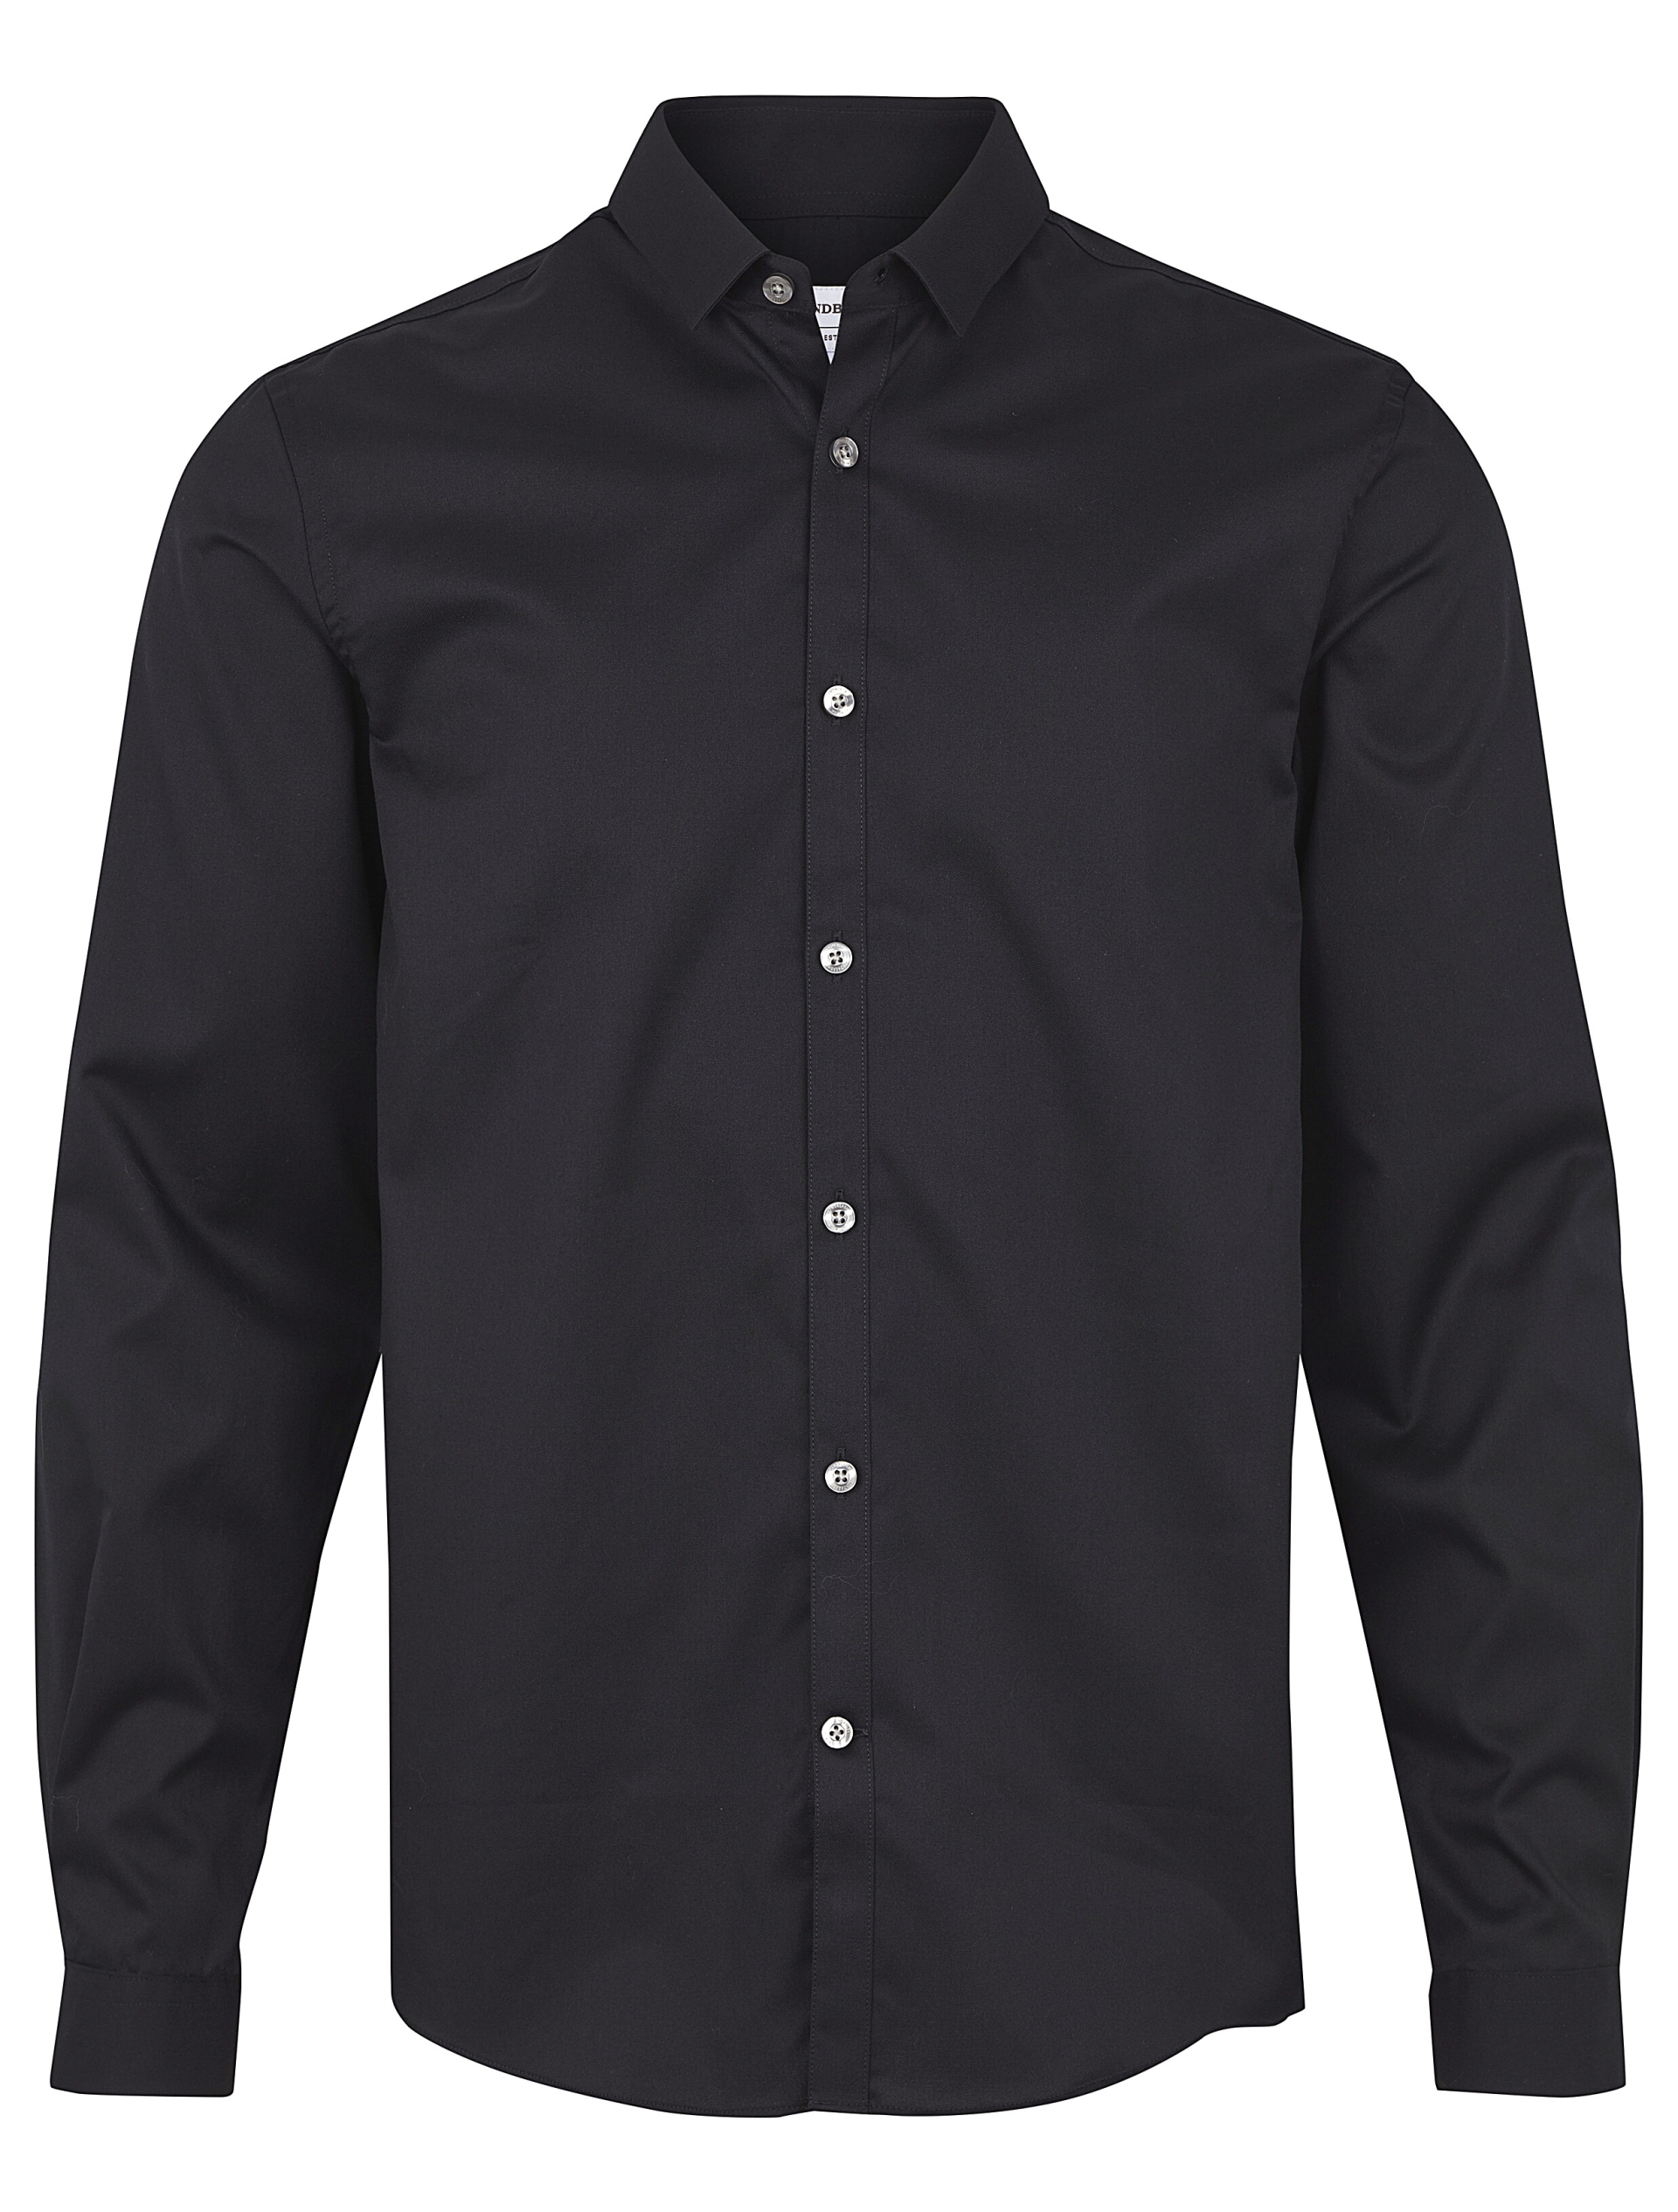 Lindbergh Business skjorte sort / black